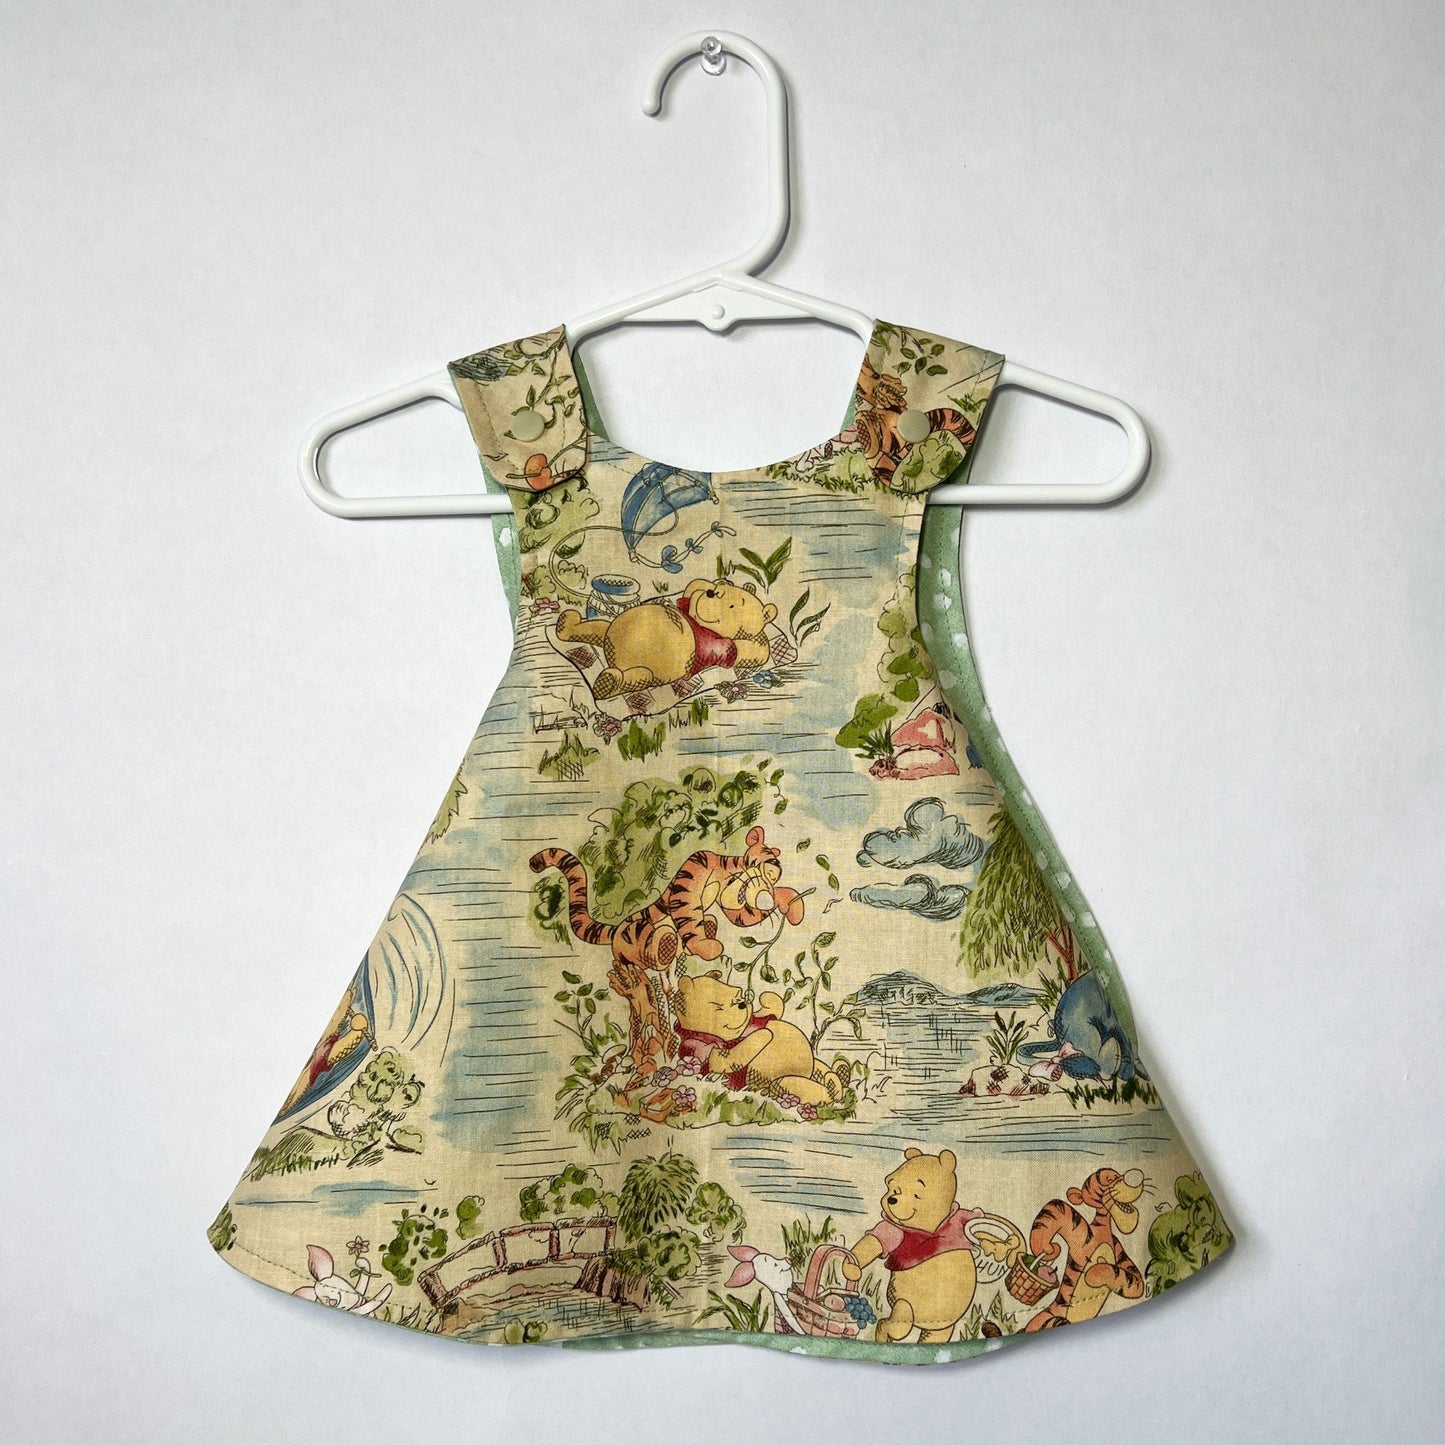 Reversible cotton dress “Winnie-the-Pooh”